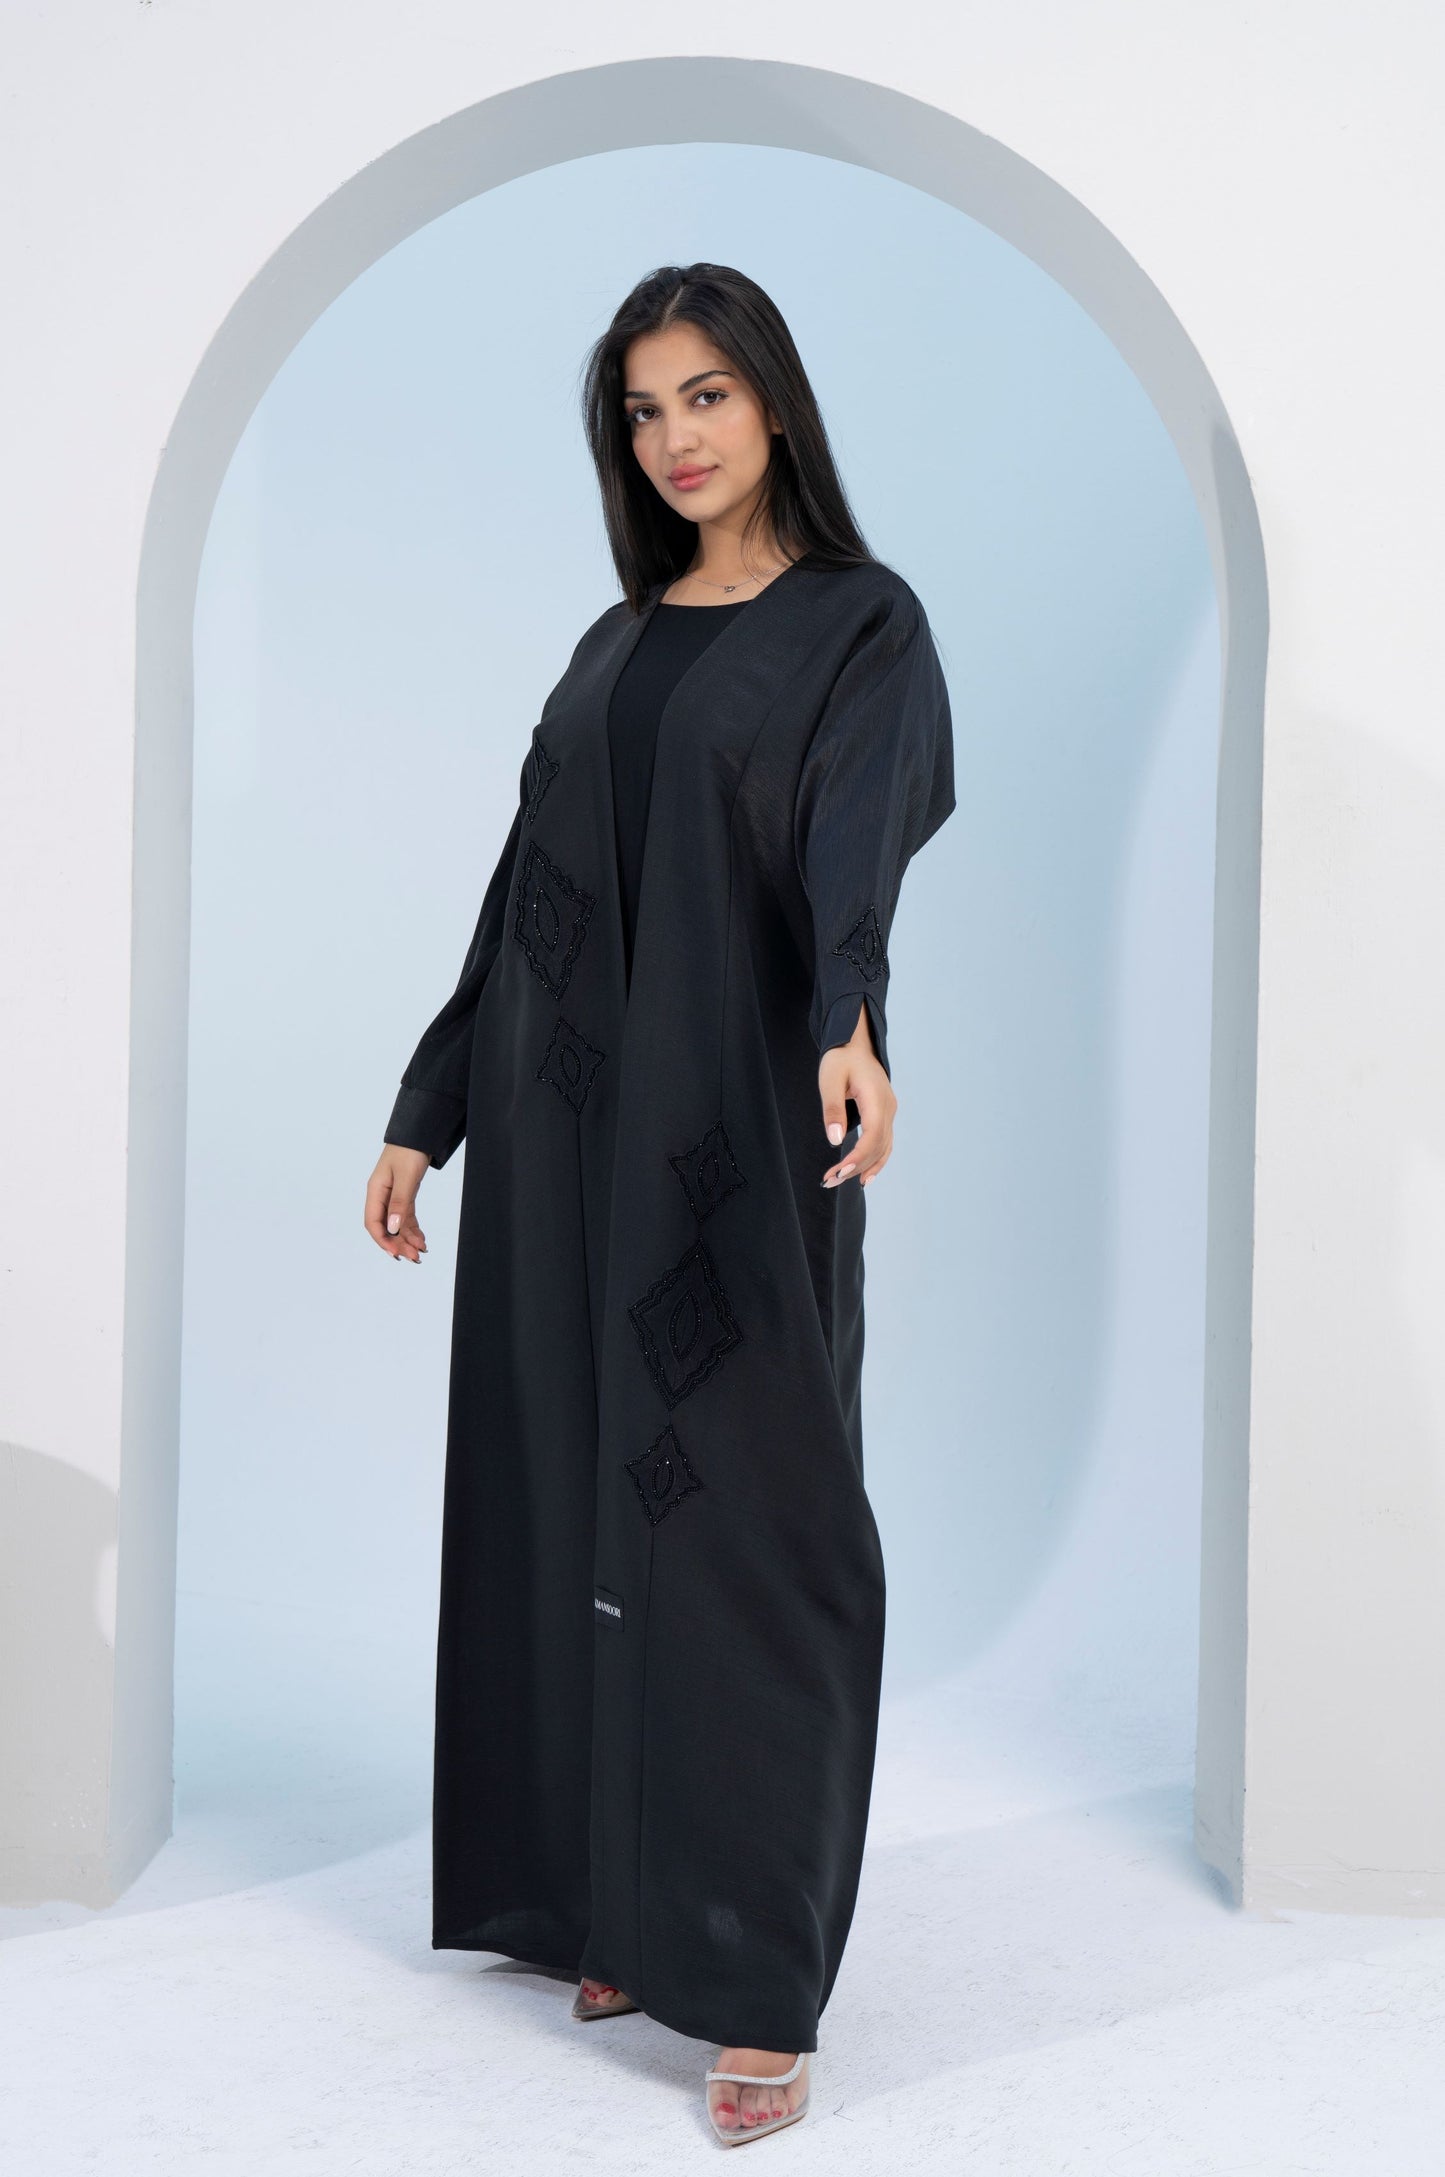 Black bisht abaya with ethnic embroidery and embellishments